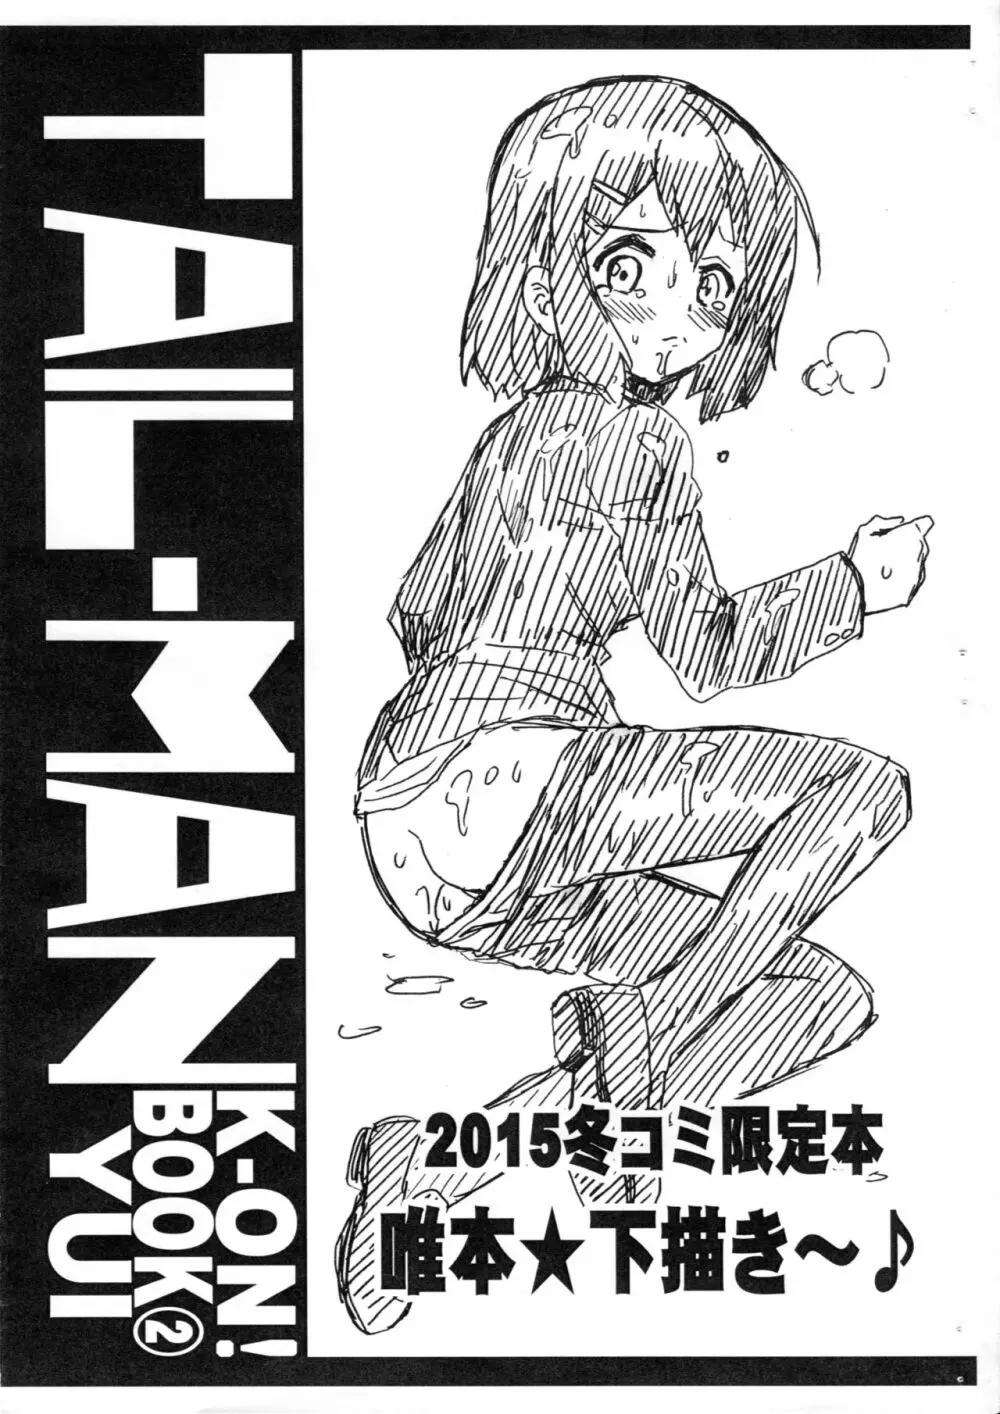 (C89) [RAT TAIL (IRIE YAMAZAKI)] TAIL-MAN K-ON! BOOK 2 YUI (けいおん!)